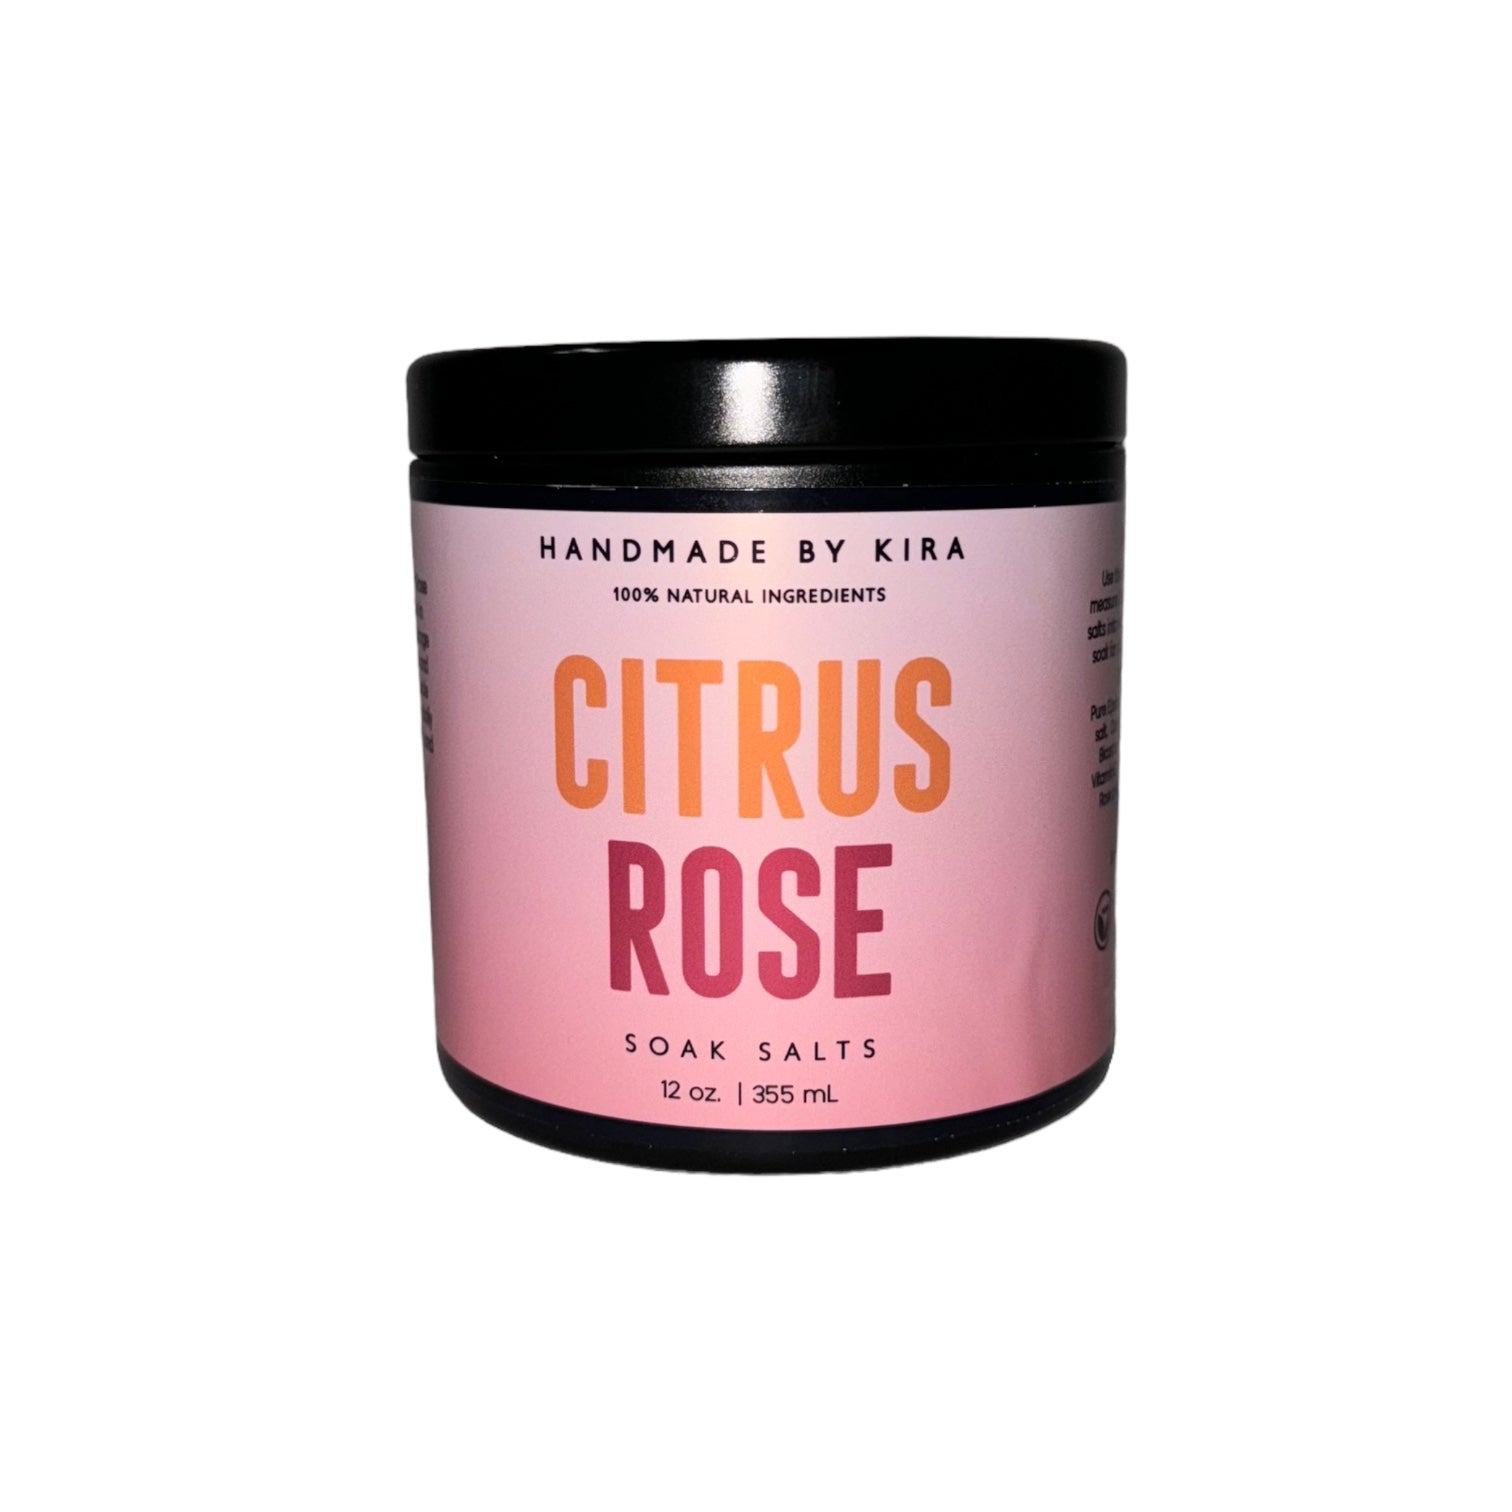 Citrus Rose Soak Salts